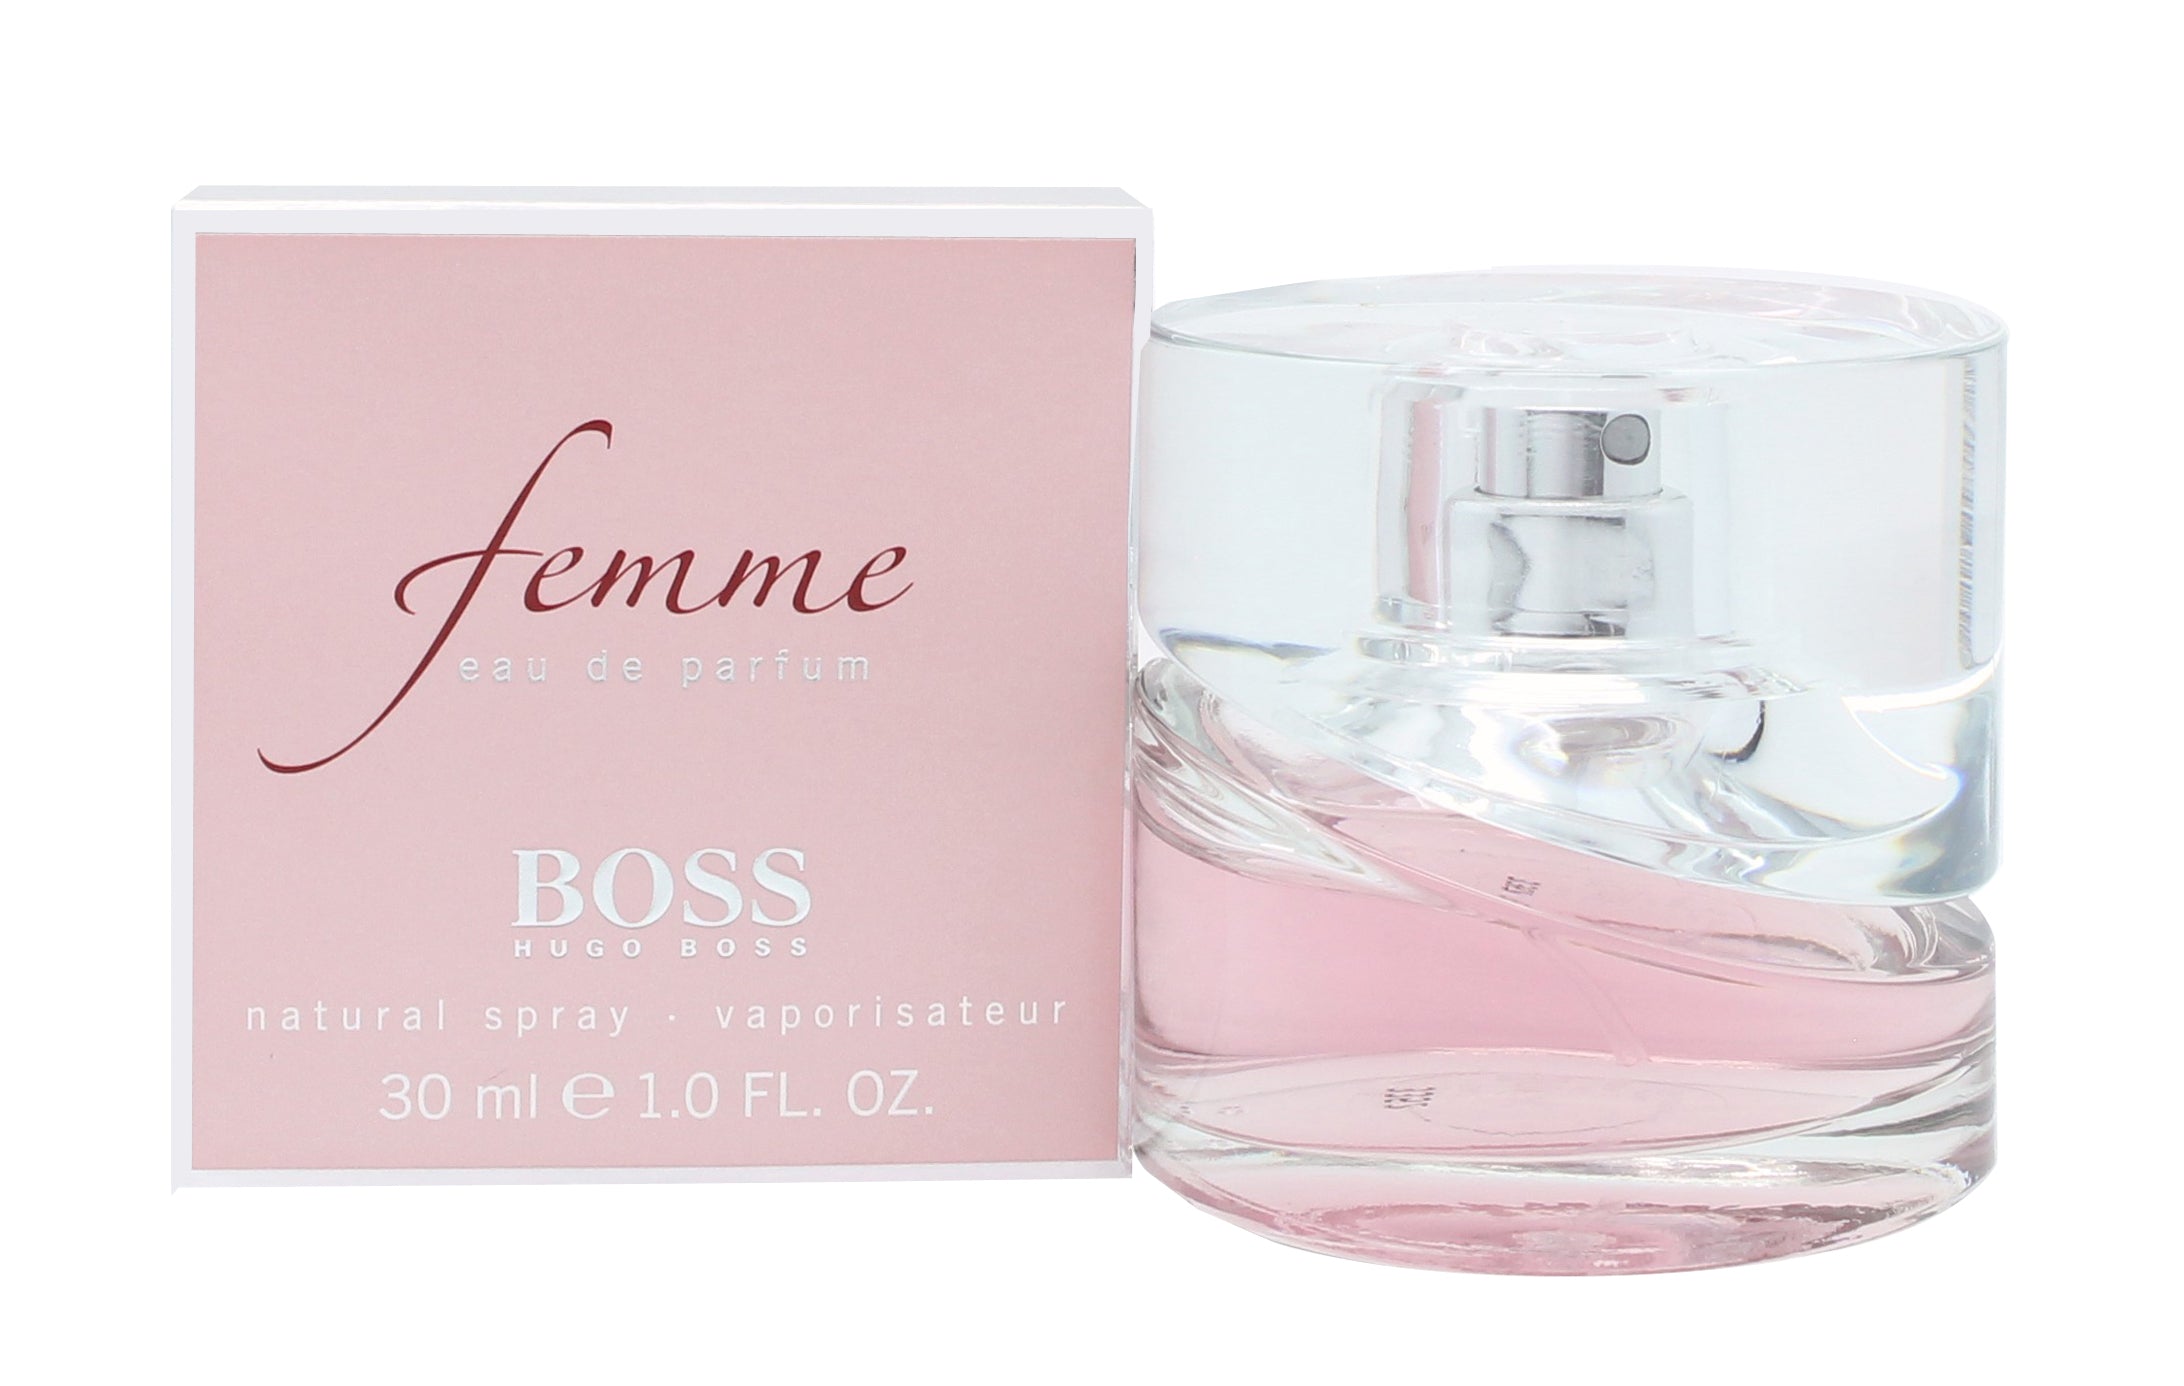 View Hugo Boss Femme Eau de Parfum 30ml Spray information